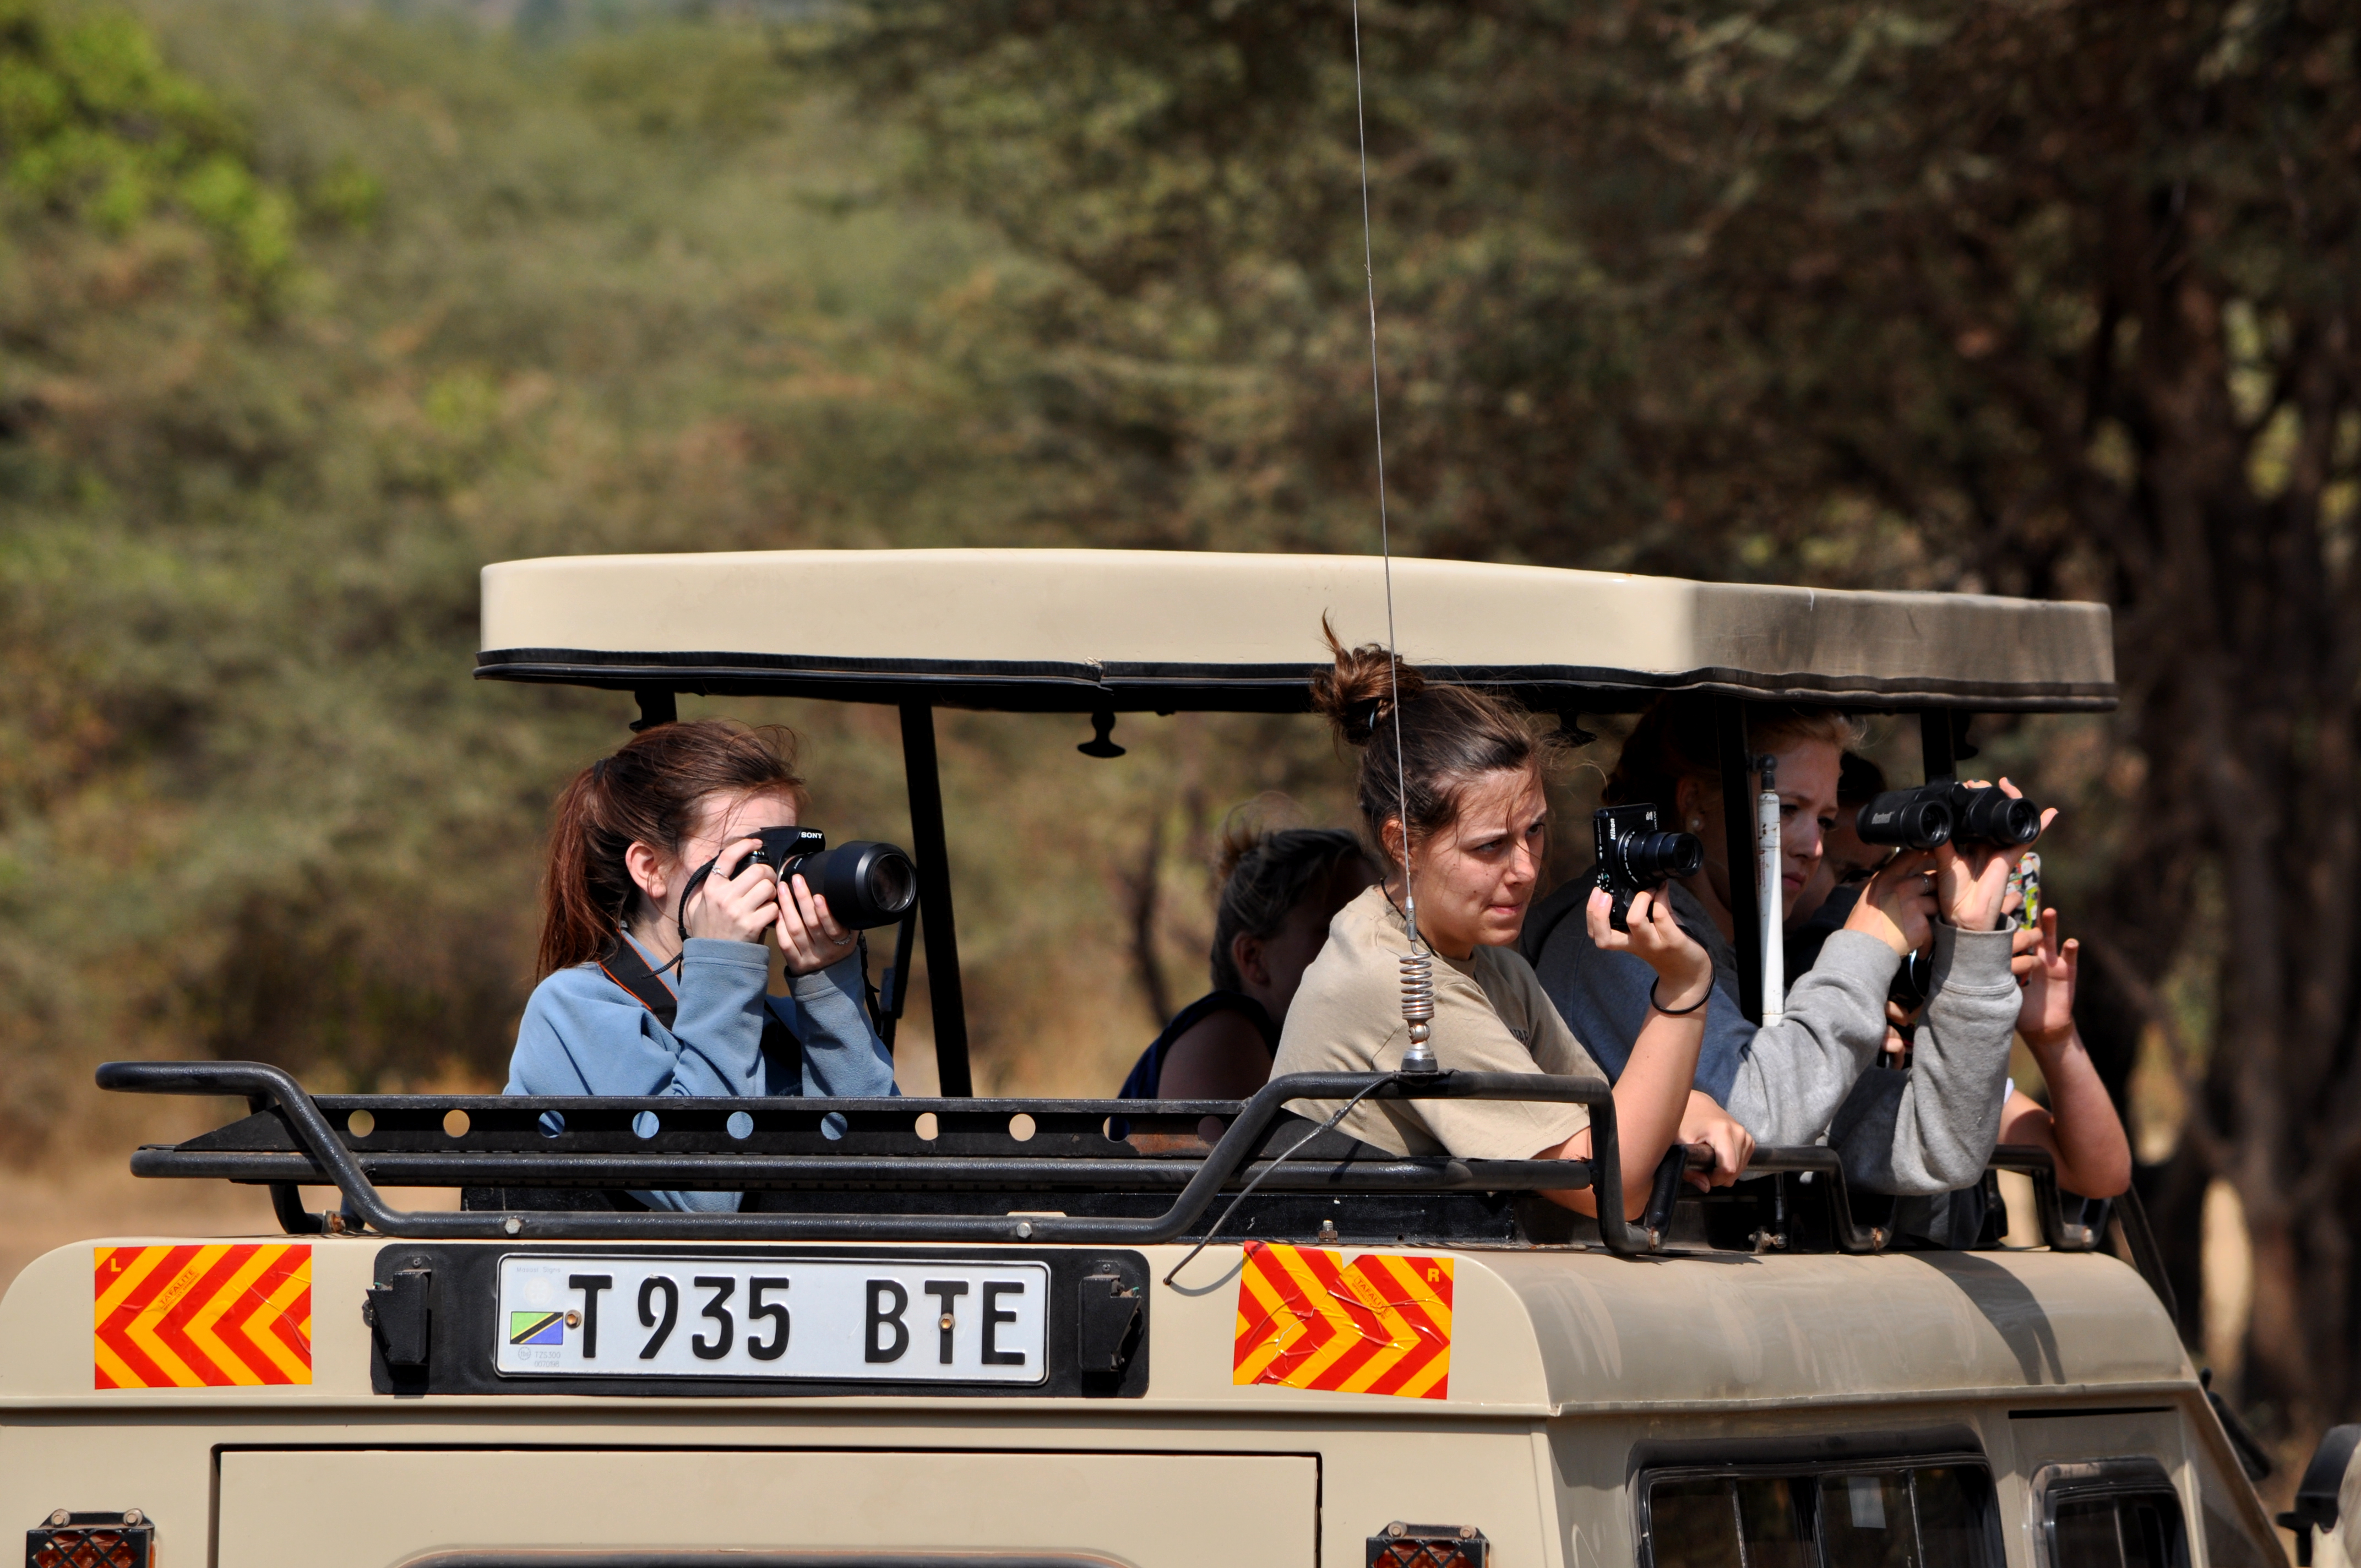 Biology Trip to Tanzania - July 2015